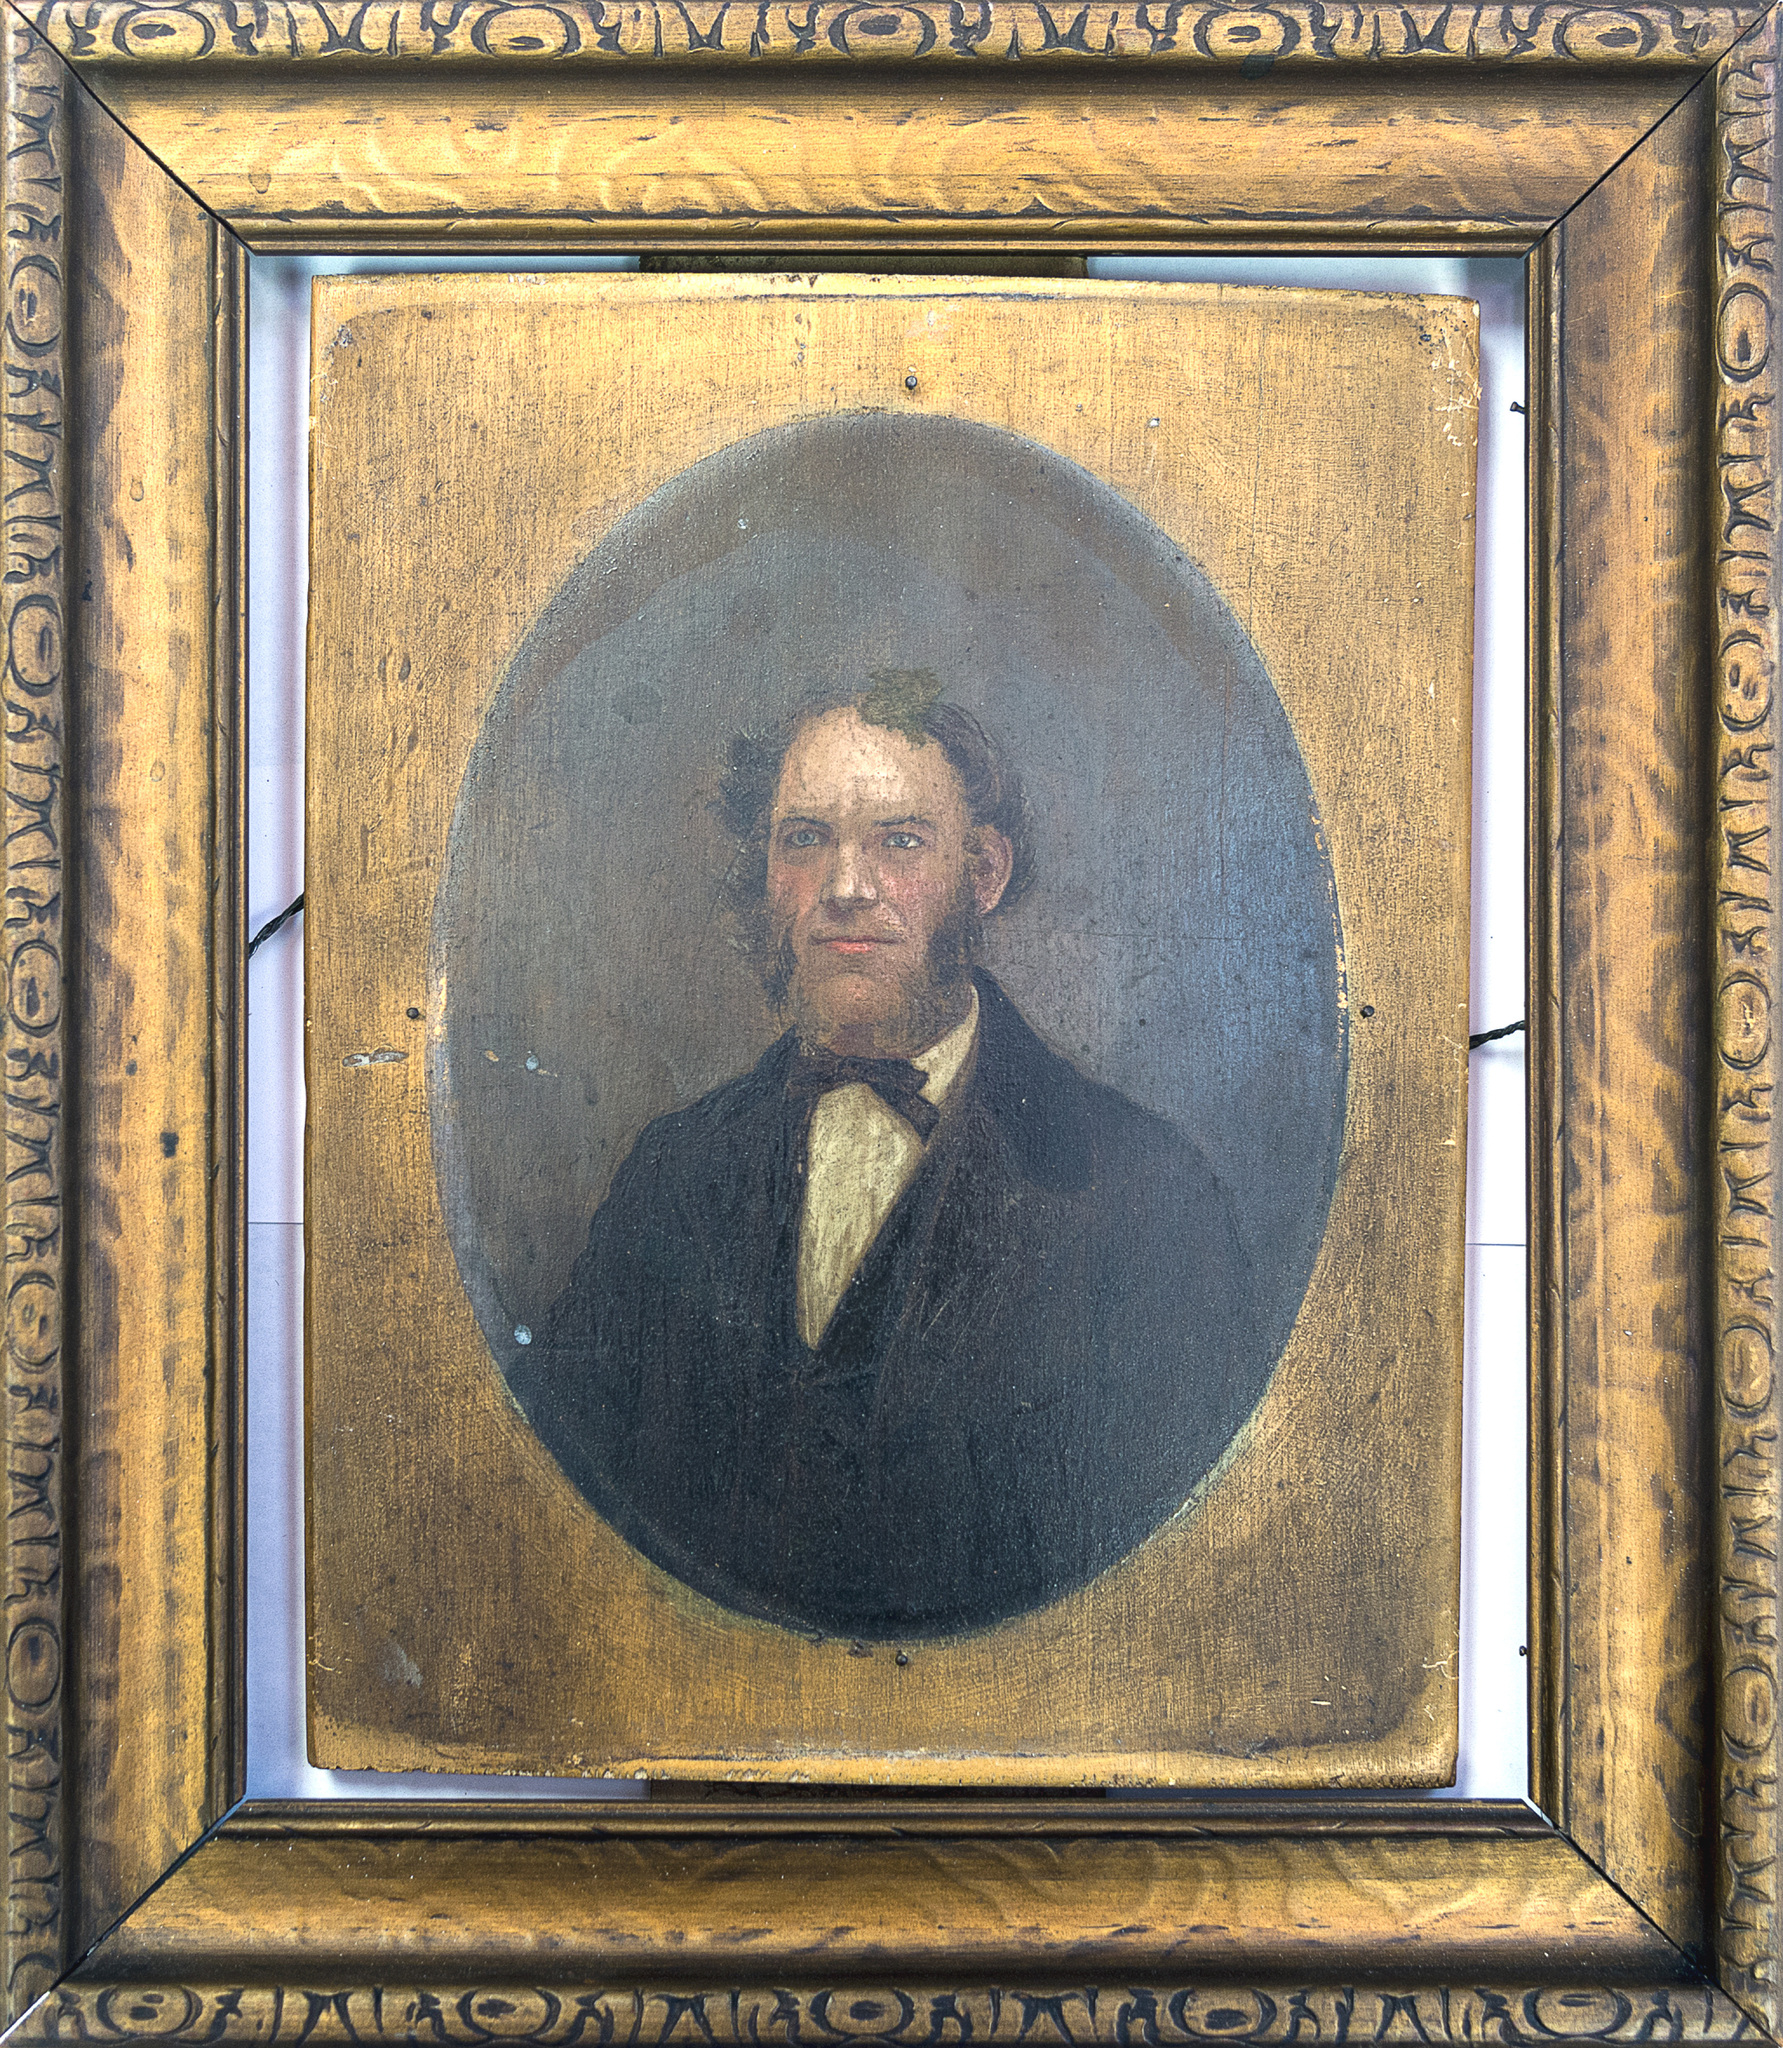 Portrait painted on wooden board of man in formal attire